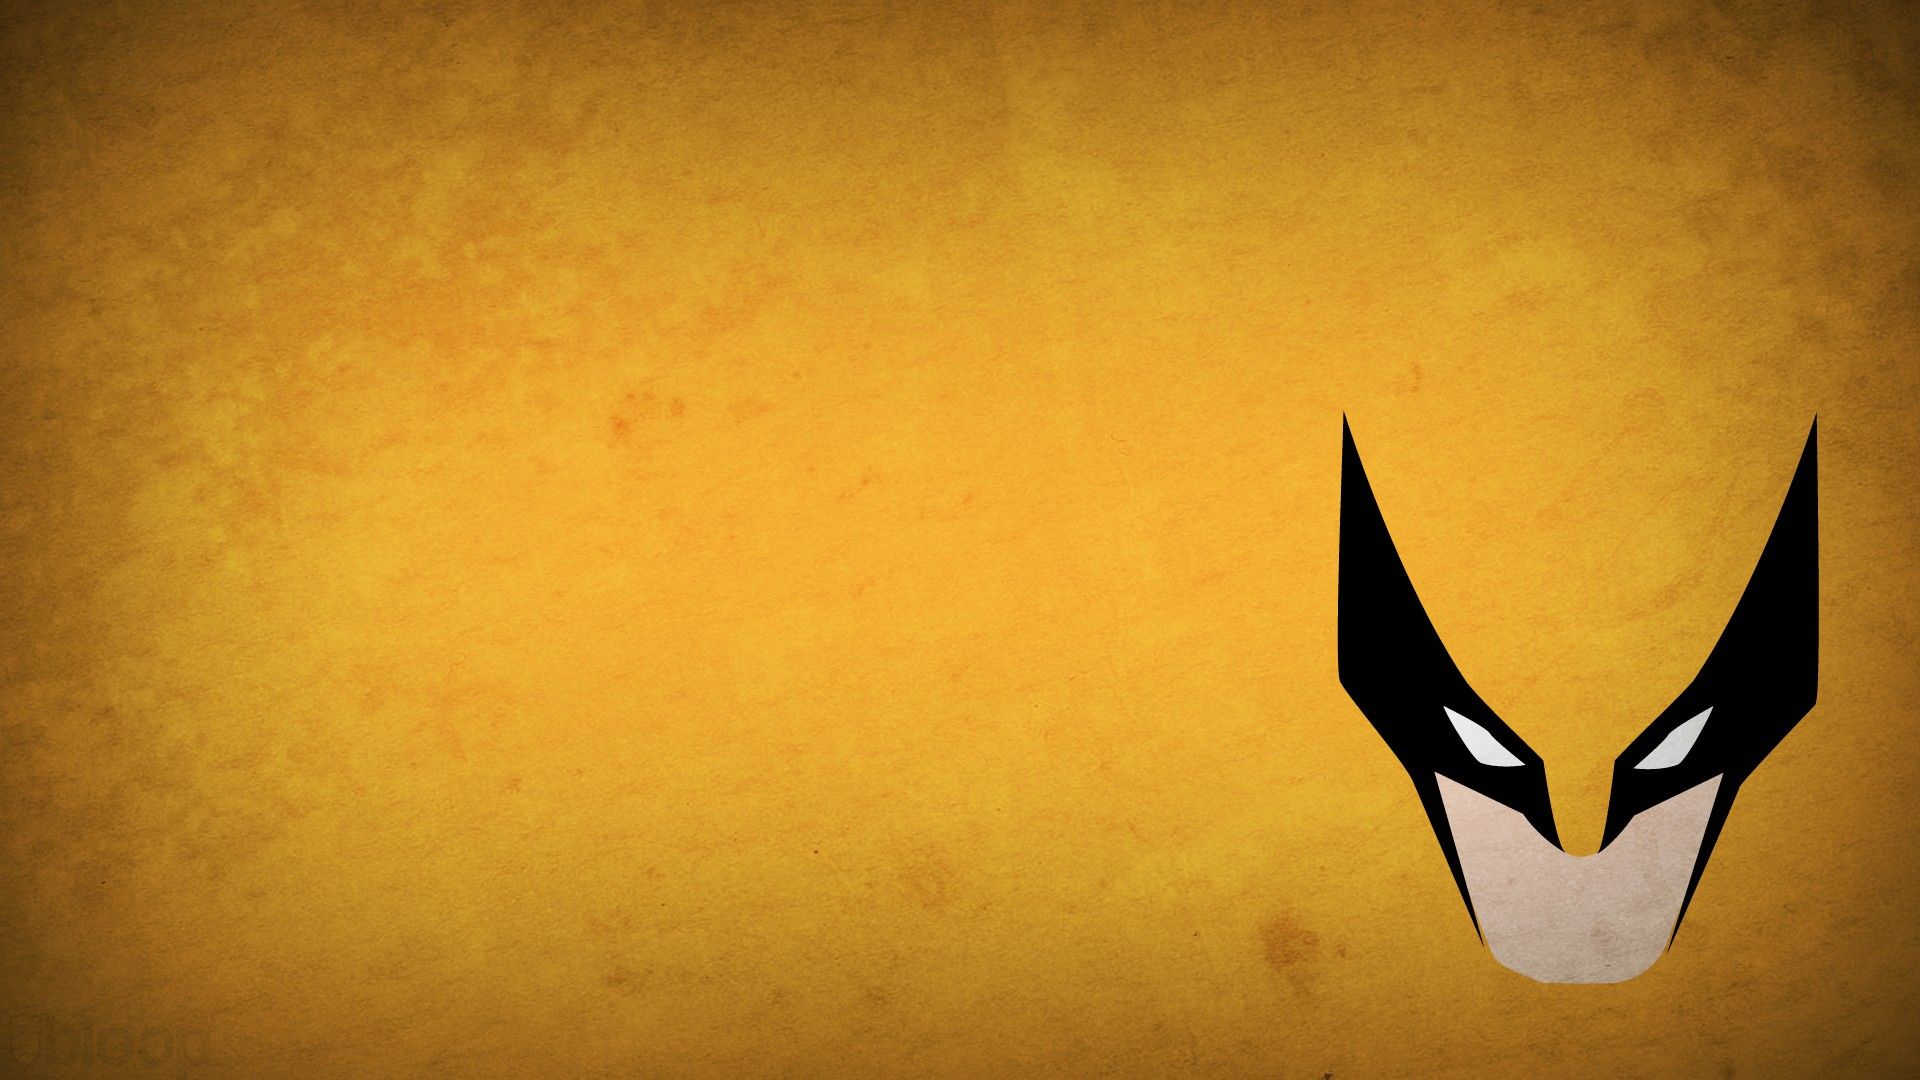 Minimalistic X Men Wolverine Superheroes Marvel Comics Yellow Background Blo0p / Wallbase.cc